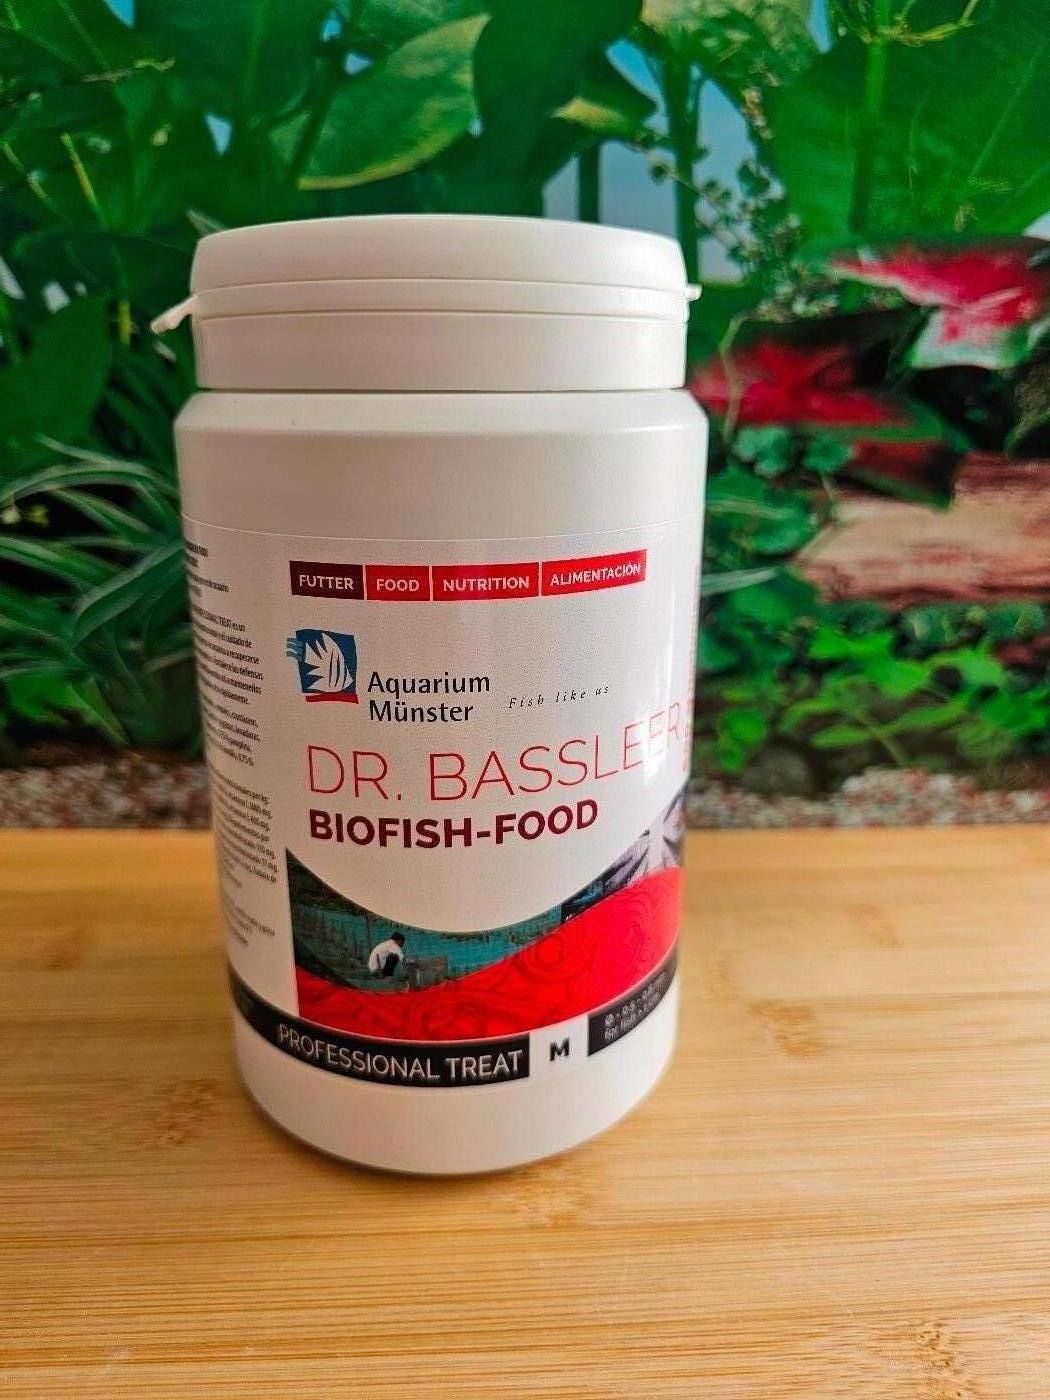 Dr. Bassleer Biofish-Food PROFESSIONAL TREAT 600g